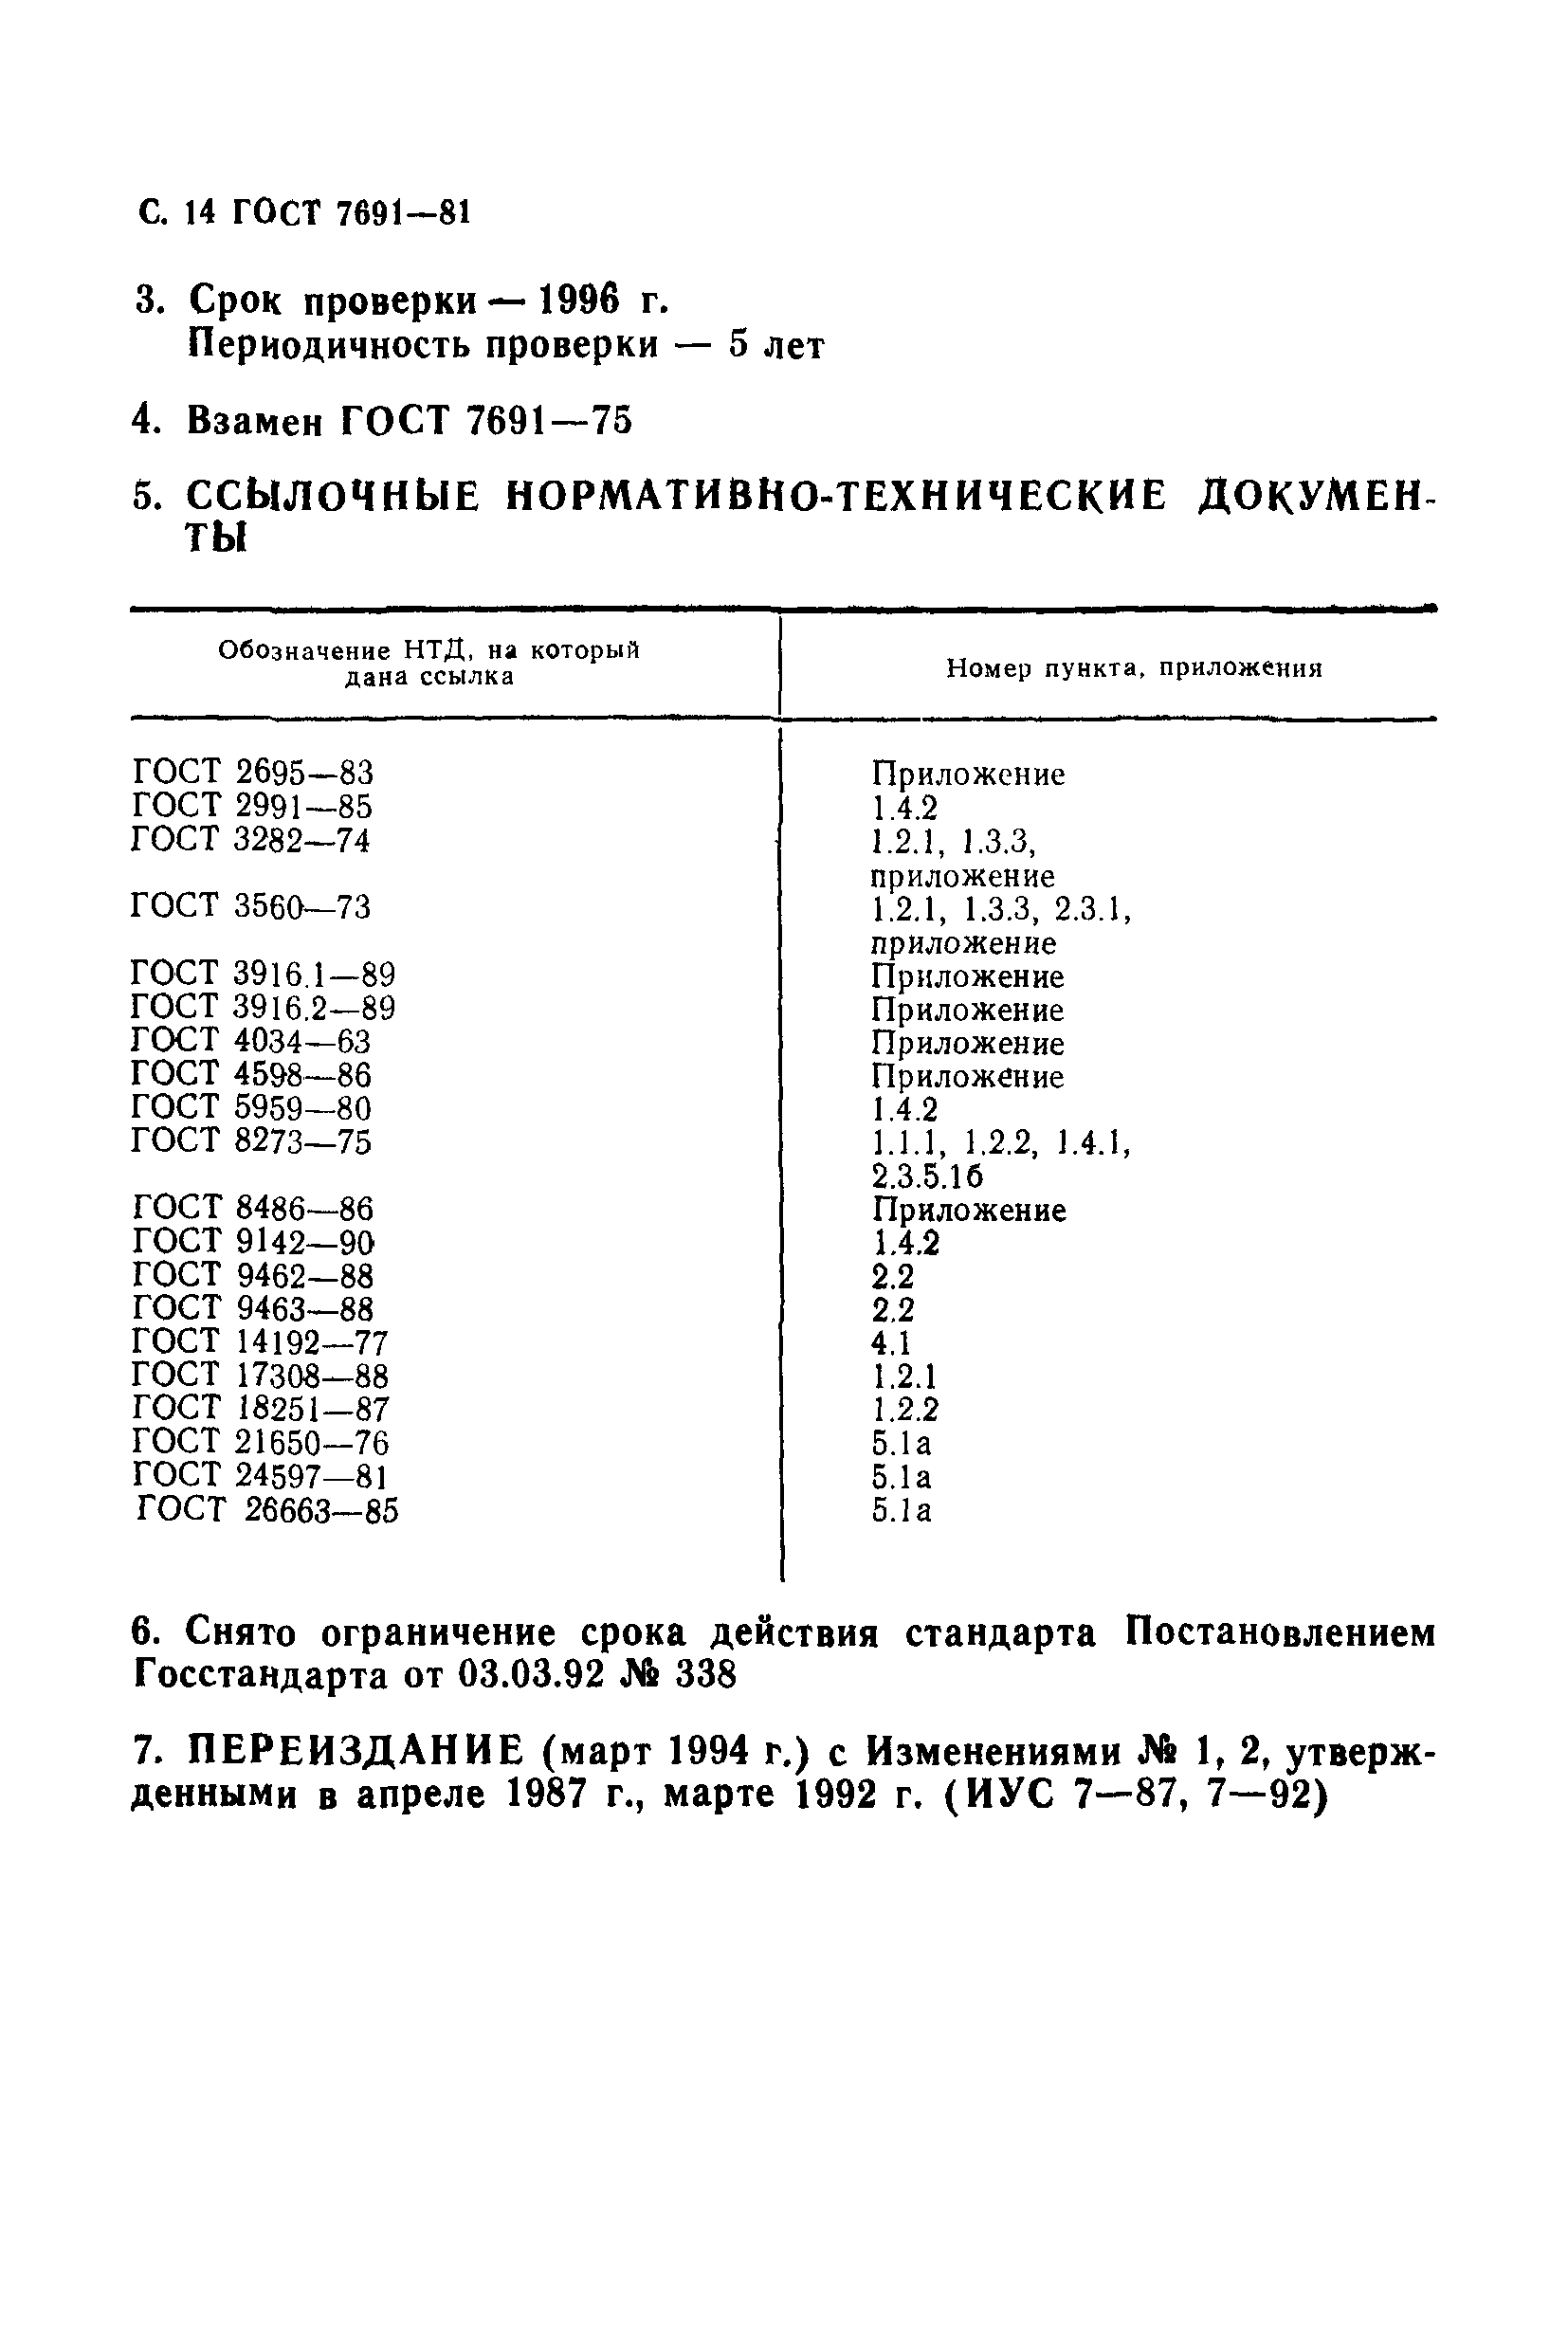 ГОСТ 7691-81